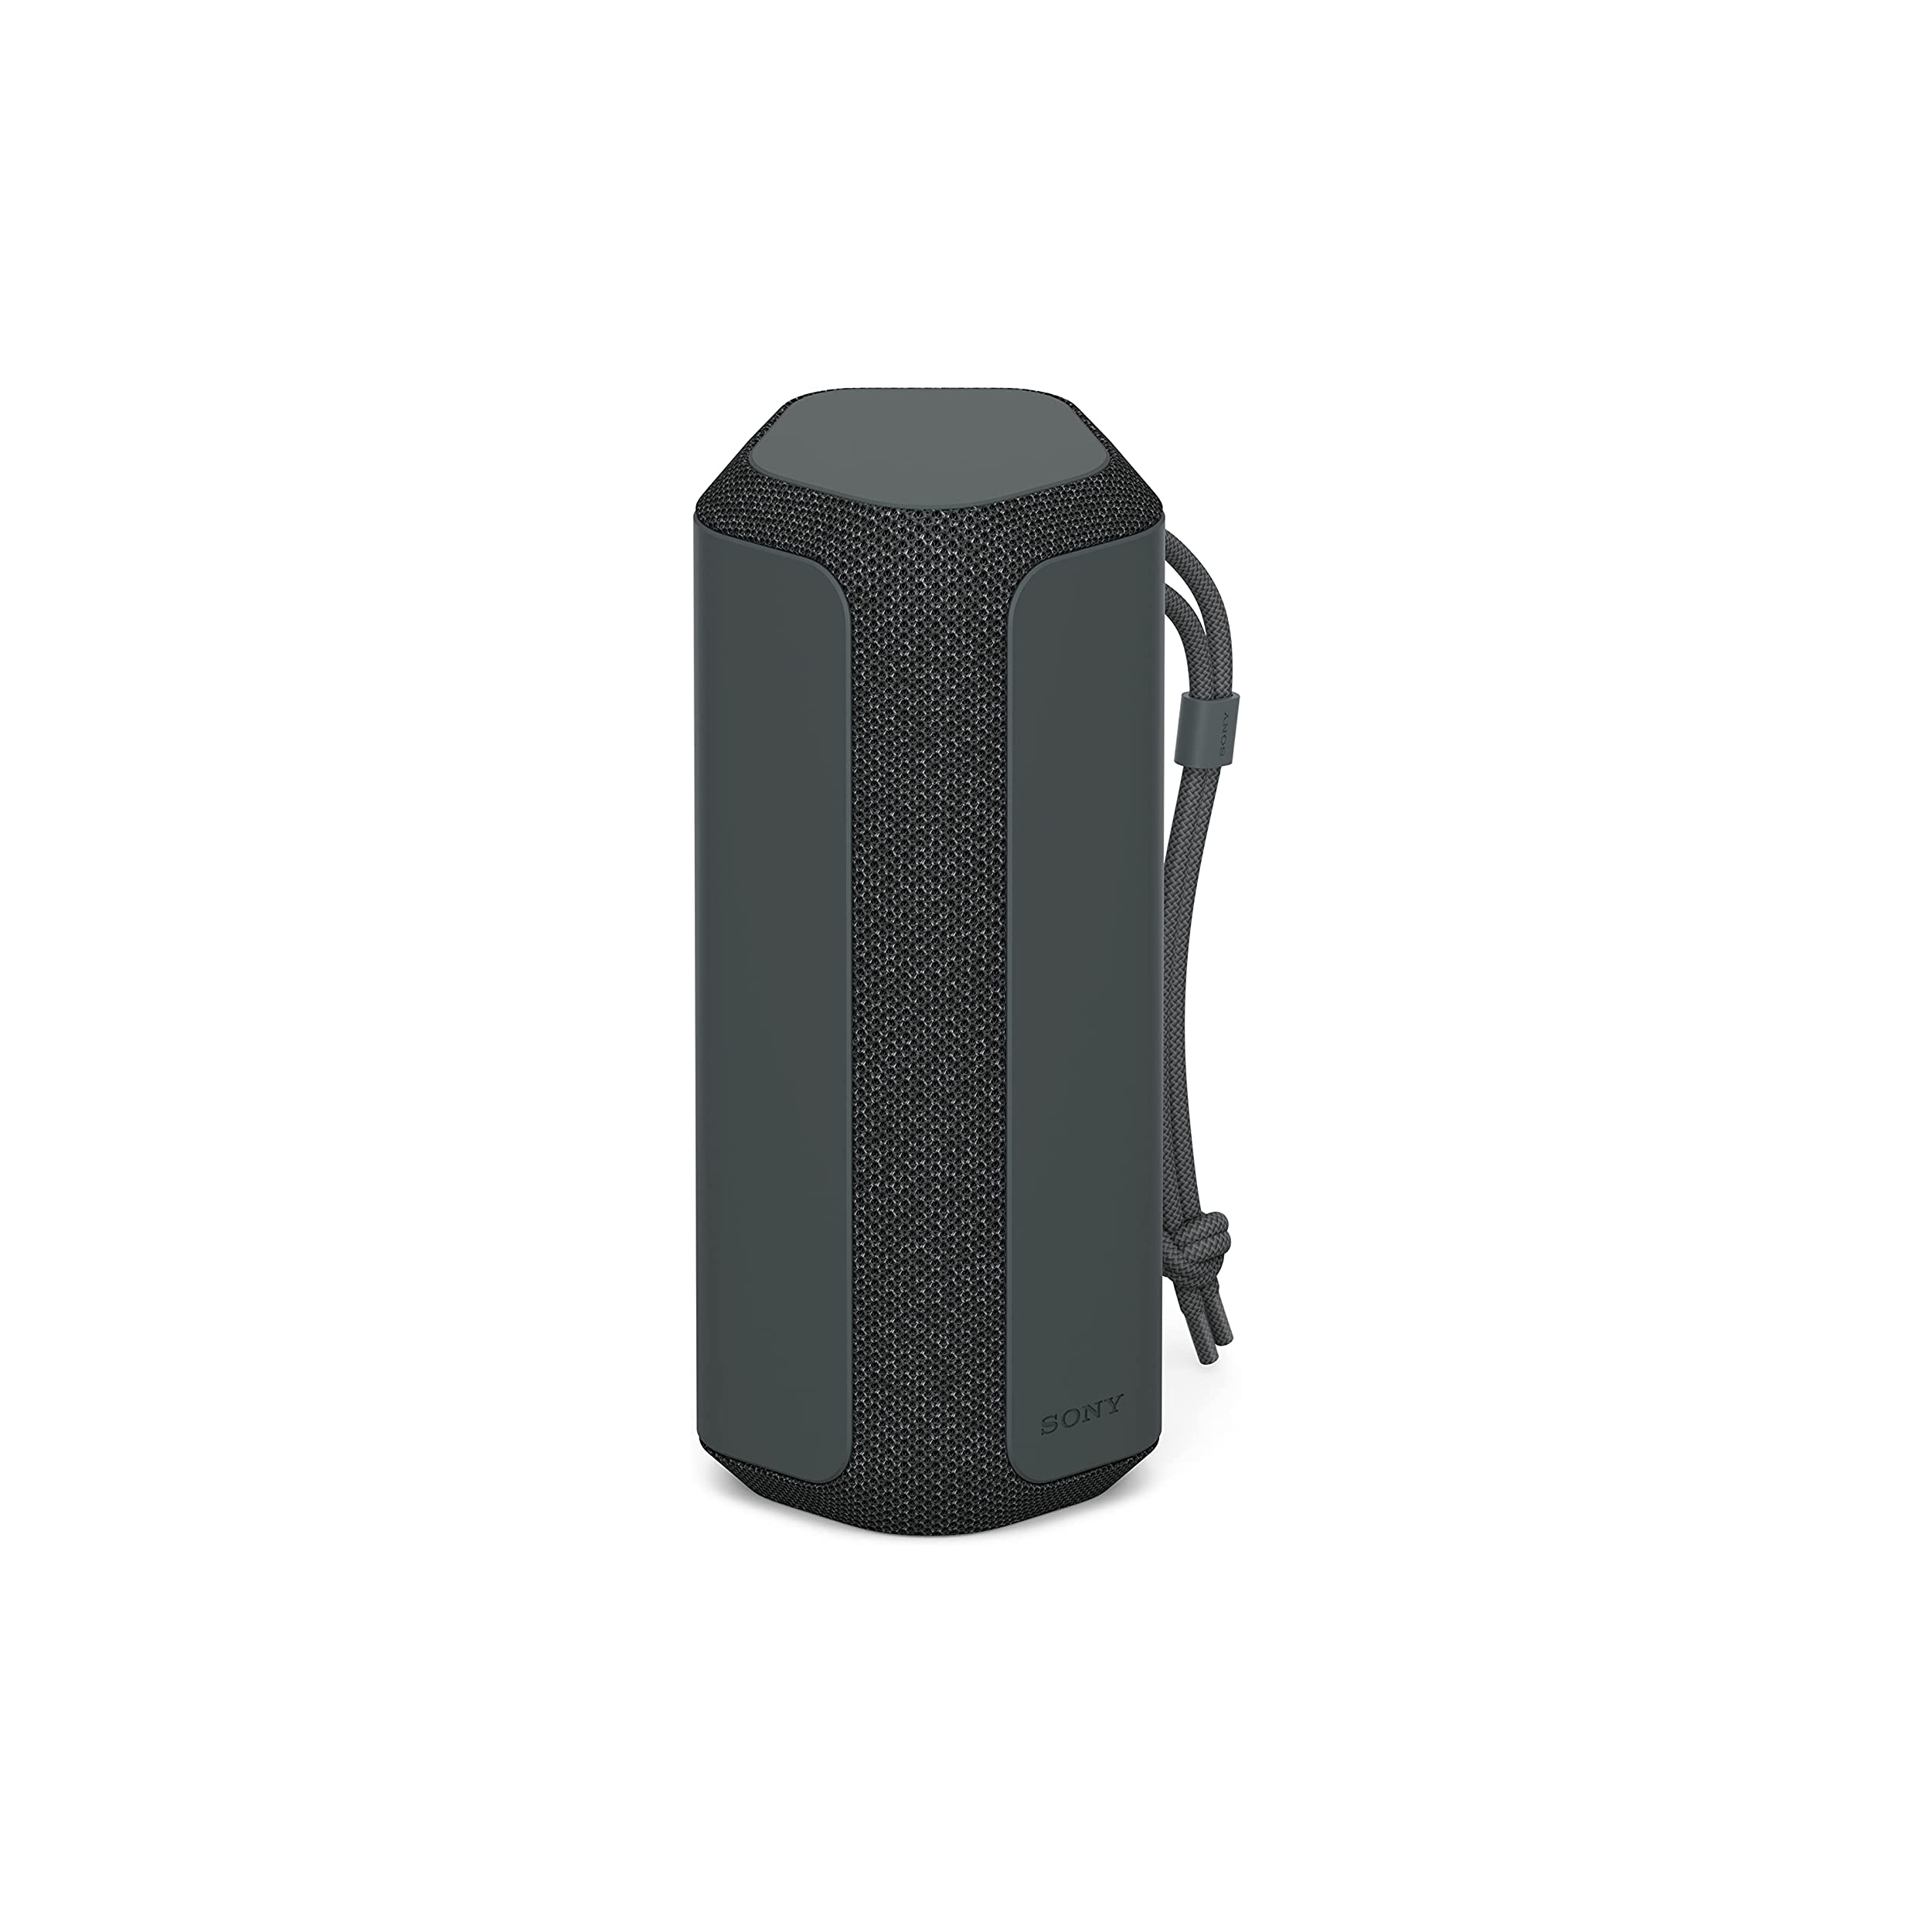 Haut-parleur Sony SRS-XE200 en haut-haut Bluetooth ultra léger imperméable